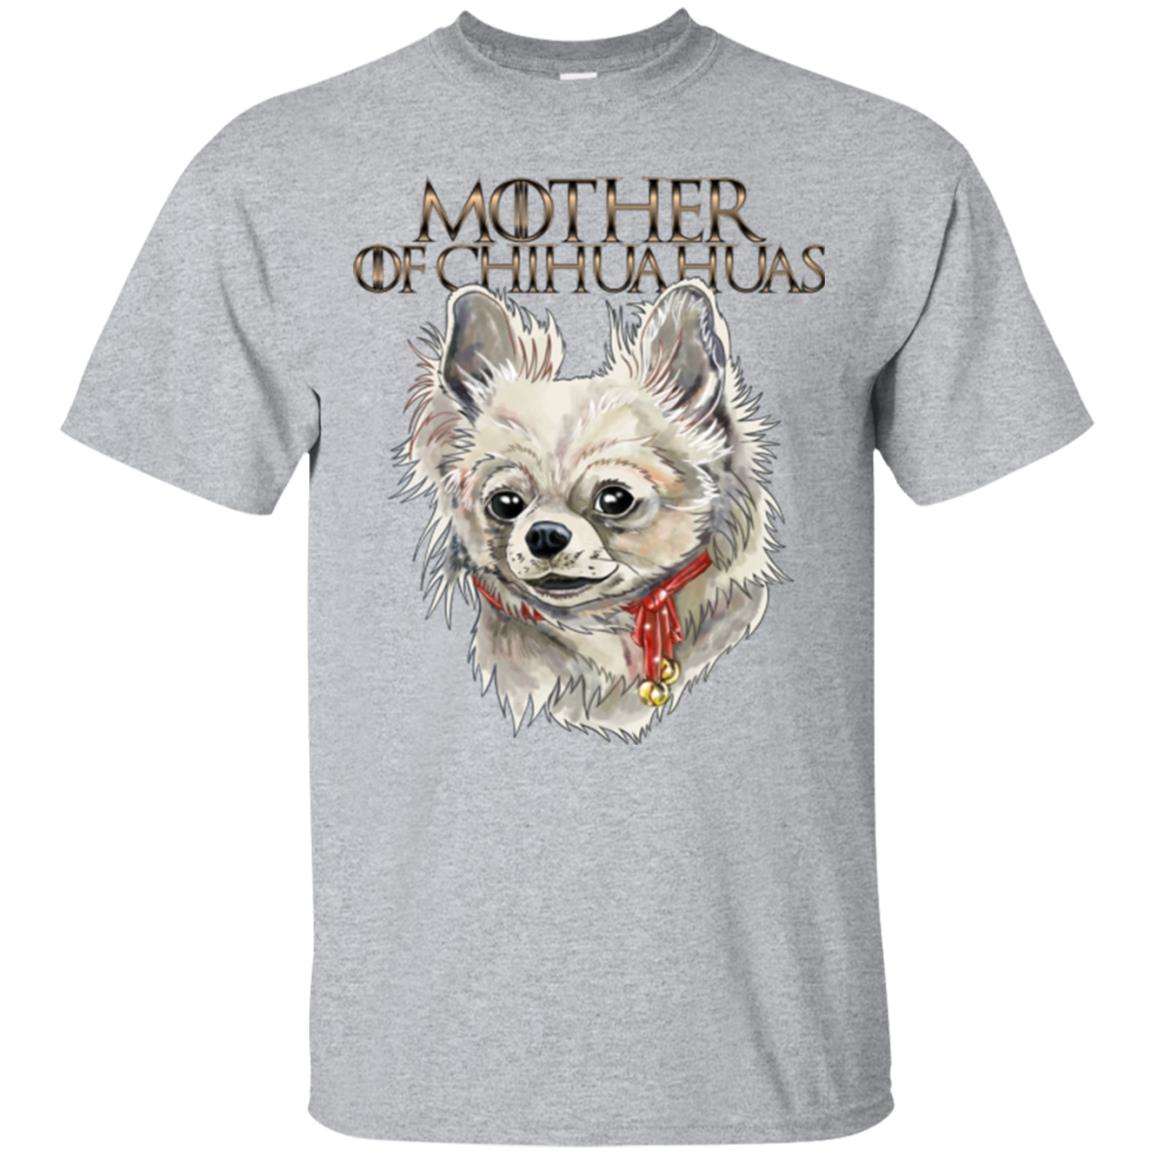 Chihuahua Shirt For Women, Girls - Mother of Chihuahuas - GoneBold.gift